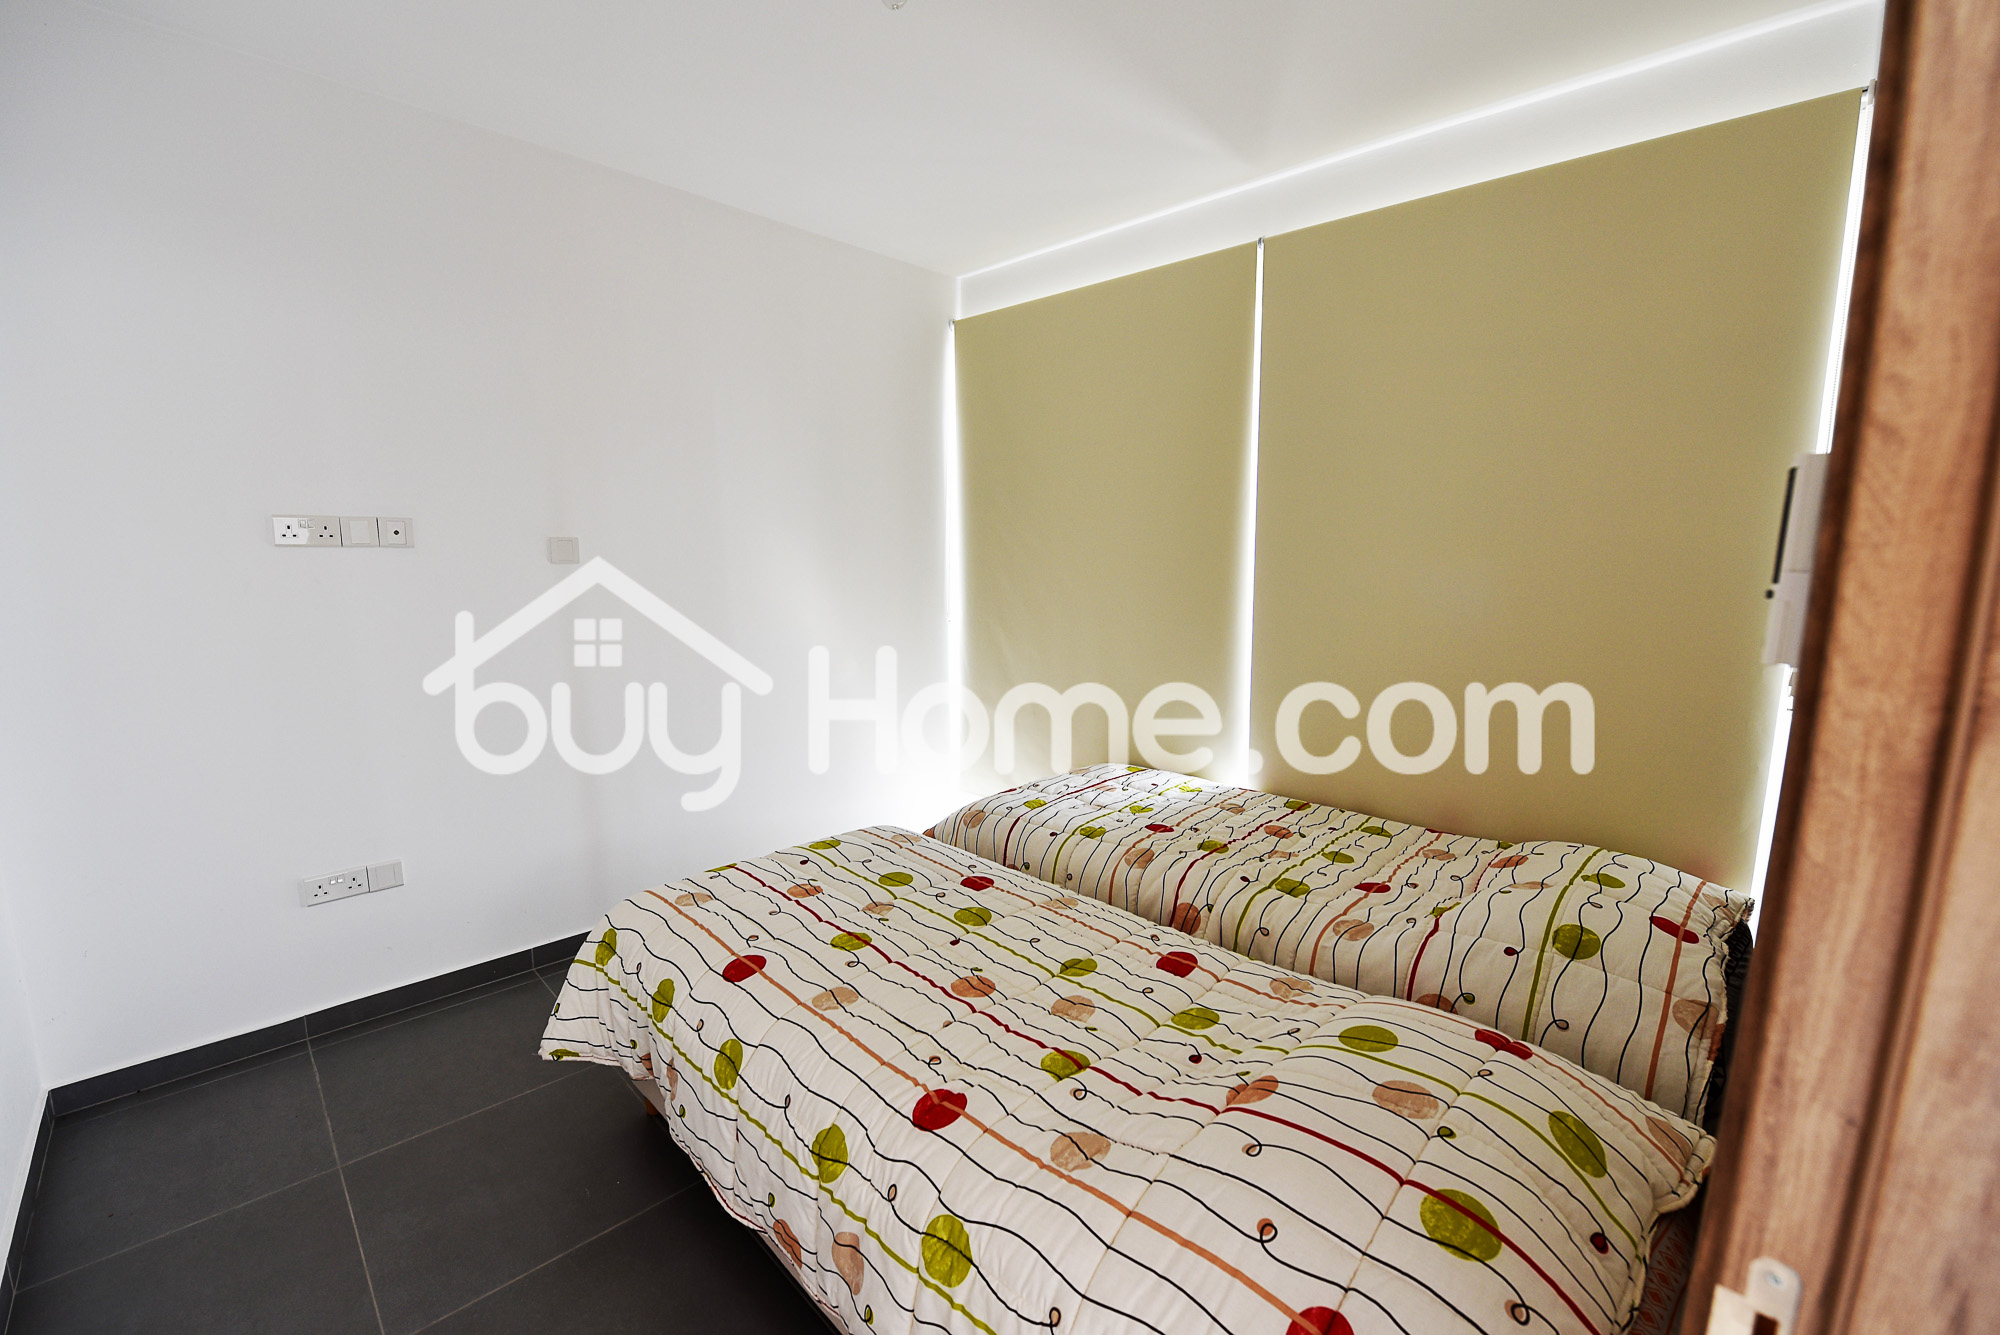 2 bedroom Ground Floor Apartment | BuyHome